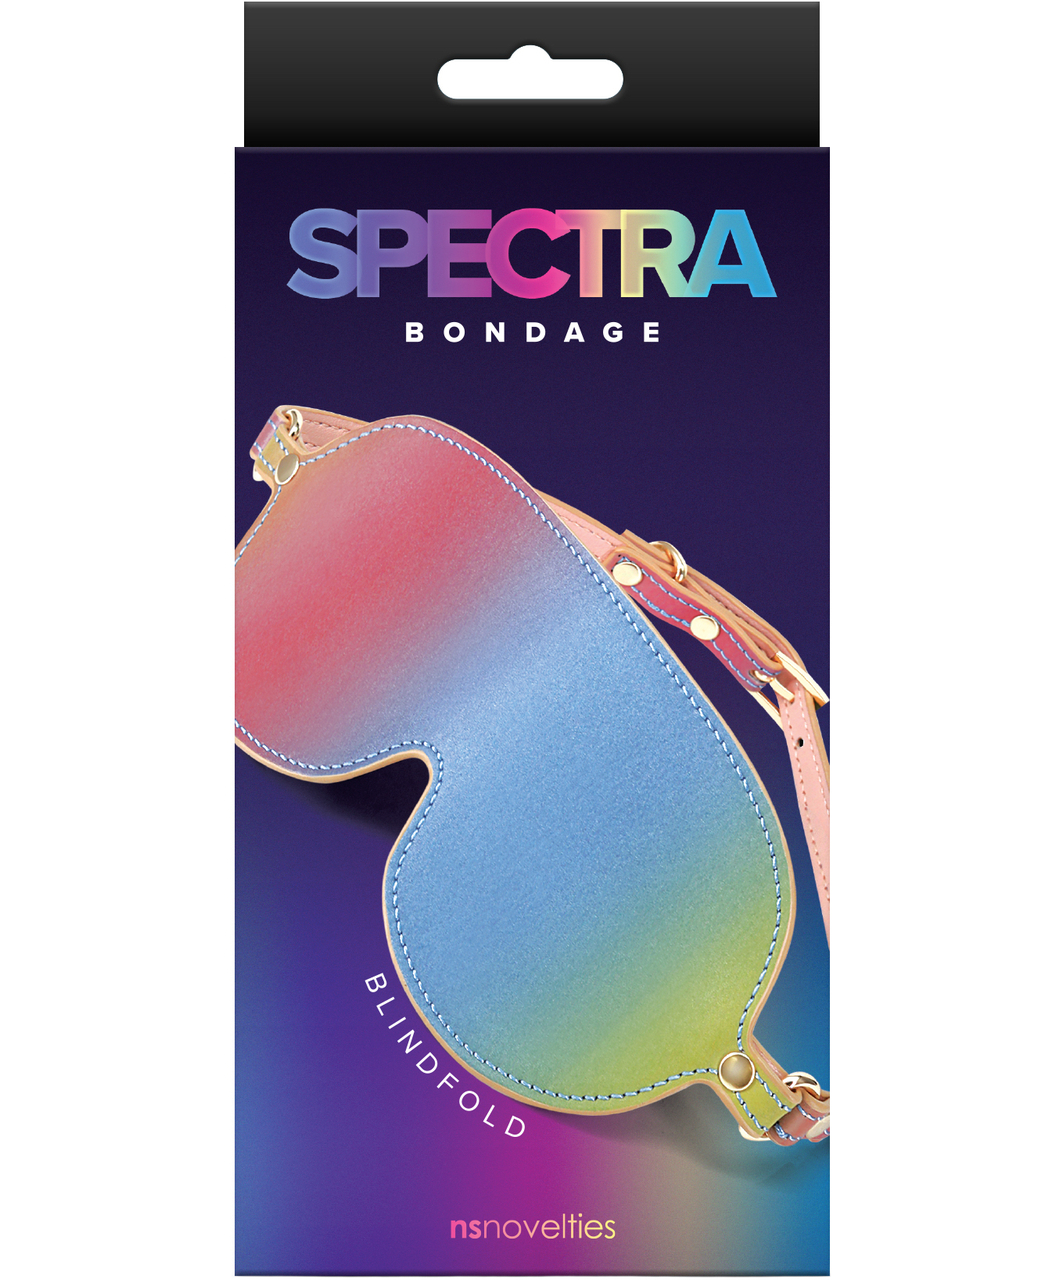 NS Novelties "Spectra Bondage" akių raištis